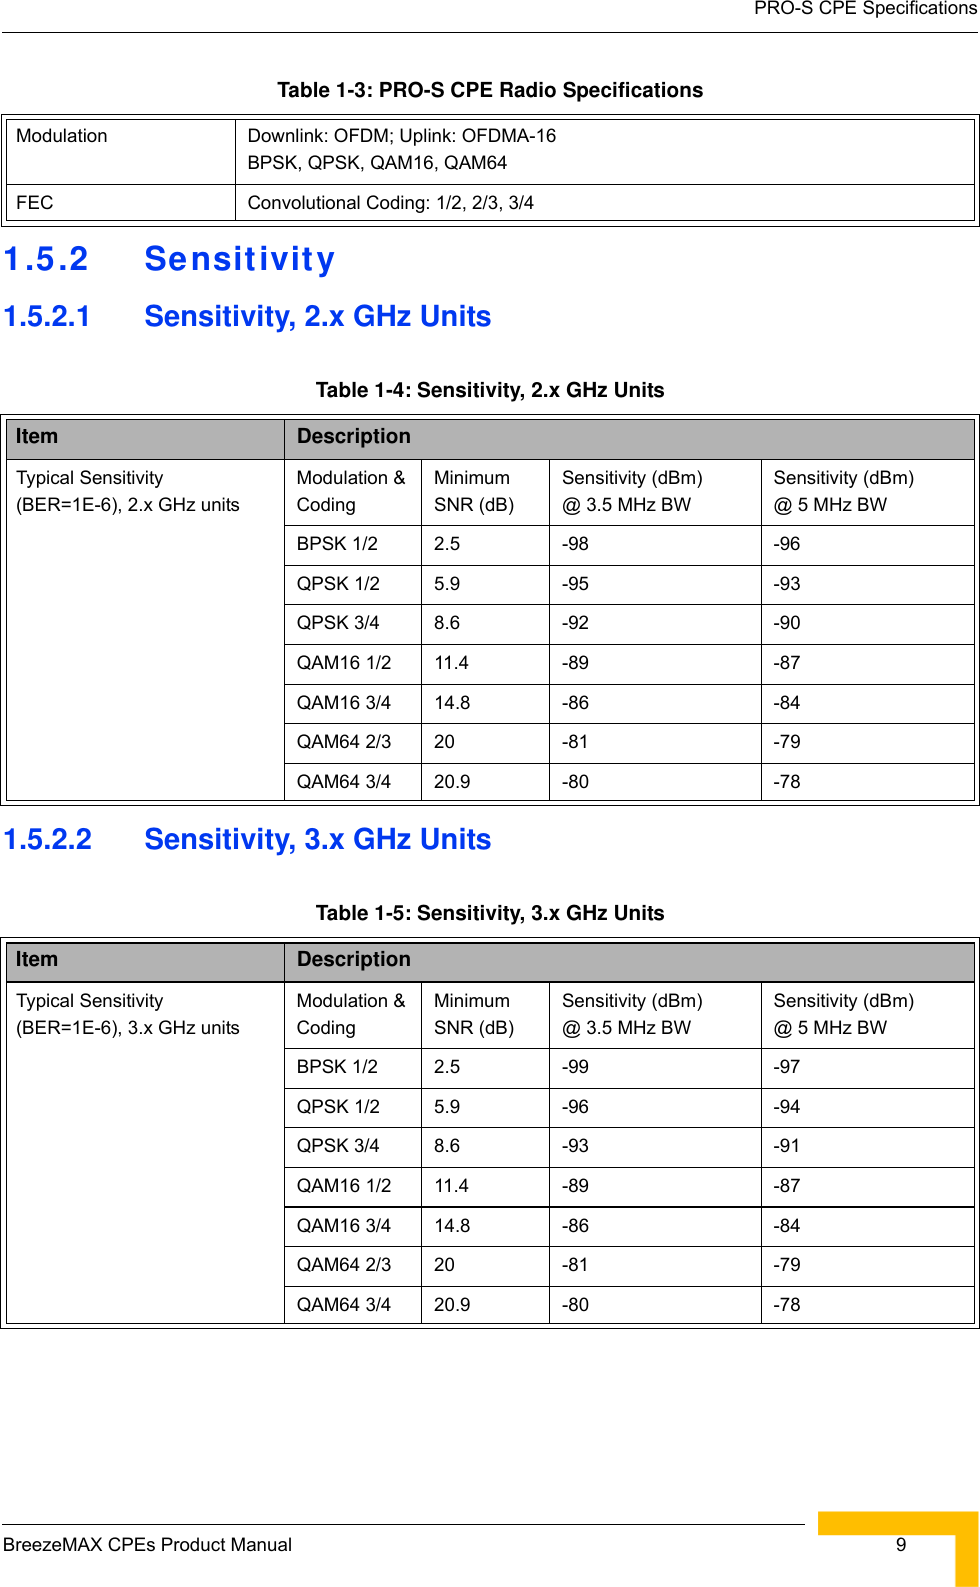 PRO-S CPE SpecificationsBreezeMAX CPEs Product Manual  91.5.2 Sensitivity1.5.2.1 Sensitivity, 2.x GHz Units1.5.2.2 Sensitivity, 3.x GHz UnitsModulation Downlink: OFDM; Uplink: OFDMA-16 BPSK, QPSK, QAM16, QAM64FEC Convolutional Coding: 1/2, 2/3, 3/4Table 1-4: Sensitivity, 2.x GHz UnitsItem DescriptionTypical Sensitivity (BER=1E-6), 2.x GHz unitsModulation &amp; CodingMinimum SNR (dB)Sensitivity (dBm)  @ 3.5 MHz BWSensitivity (dBm)  @ 5 MHz BWBPSK 1/2 2.5 -98 -96QPSK 1/2 5.9 -95 -93QPSK 3/4 8.6 -92 -90QAM16 1/2 11.4 -89 -87QAM16 3/4 14.8 -86 -84QAM64 2/3 20 -81 -79QAM64 3/4 20.9 -80 -78Table 1-5: Sensitivity, 3.x GHz UnitsItem DescriptionTypical Sensitivity (BER=1E-6), 3.x GHz unitsModulation &amp; CodingMinimum SNR (dB)Sensitivity (dBm)  @ 3.5 MHz BWSensitivity (dBm)  @ 5 MHz BWBPSK 1/2 2.5 -99 -97QPSK 1/2 5.9 -96 -94QPSK 3/4 8.6 -93 -91QAM16 1/2 11.4 -89 -87QAM16 3/4 14.8 -86 -84QAM64 2/3 20 -81 -79QAM64 3/4 20.9 -80 -78Table 1-3: PRO-S CPE Radio Specifications